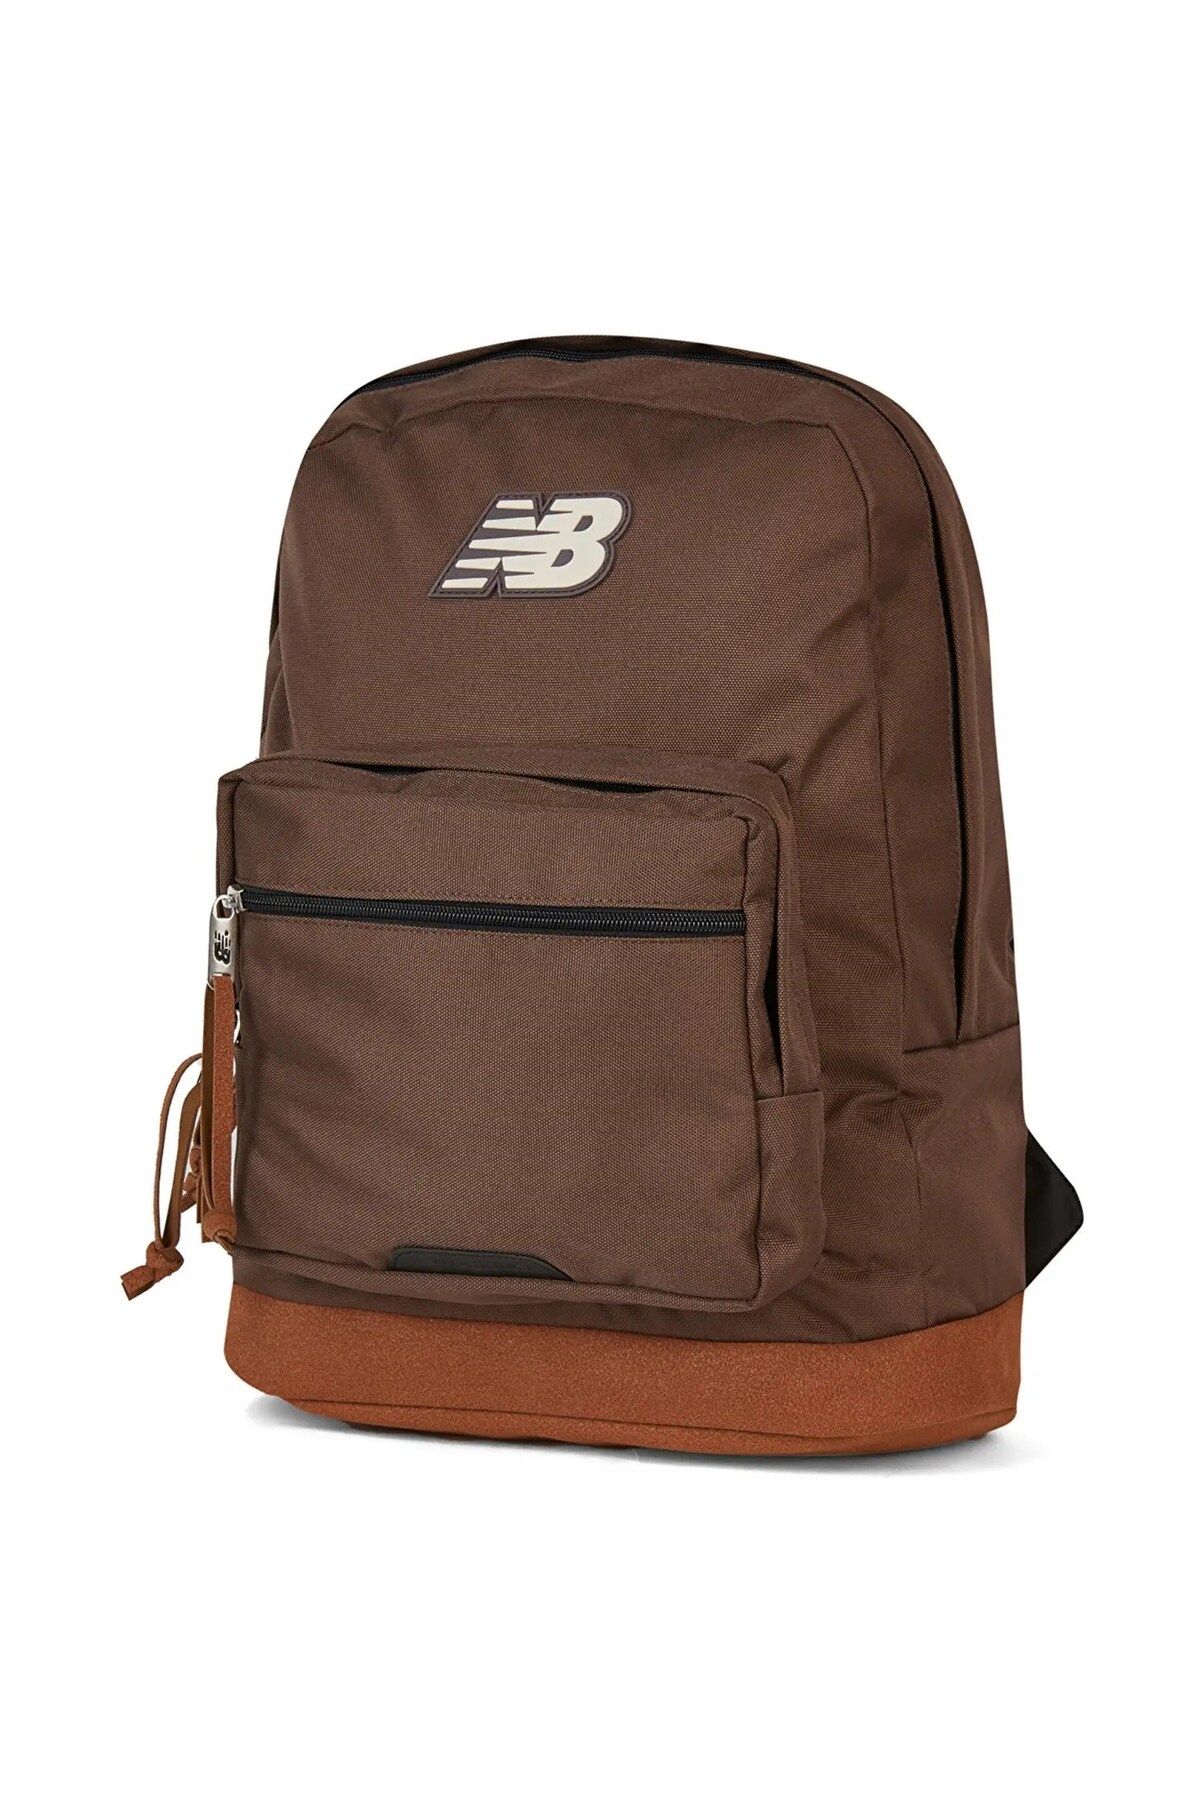 New Balance Backpack Çanta